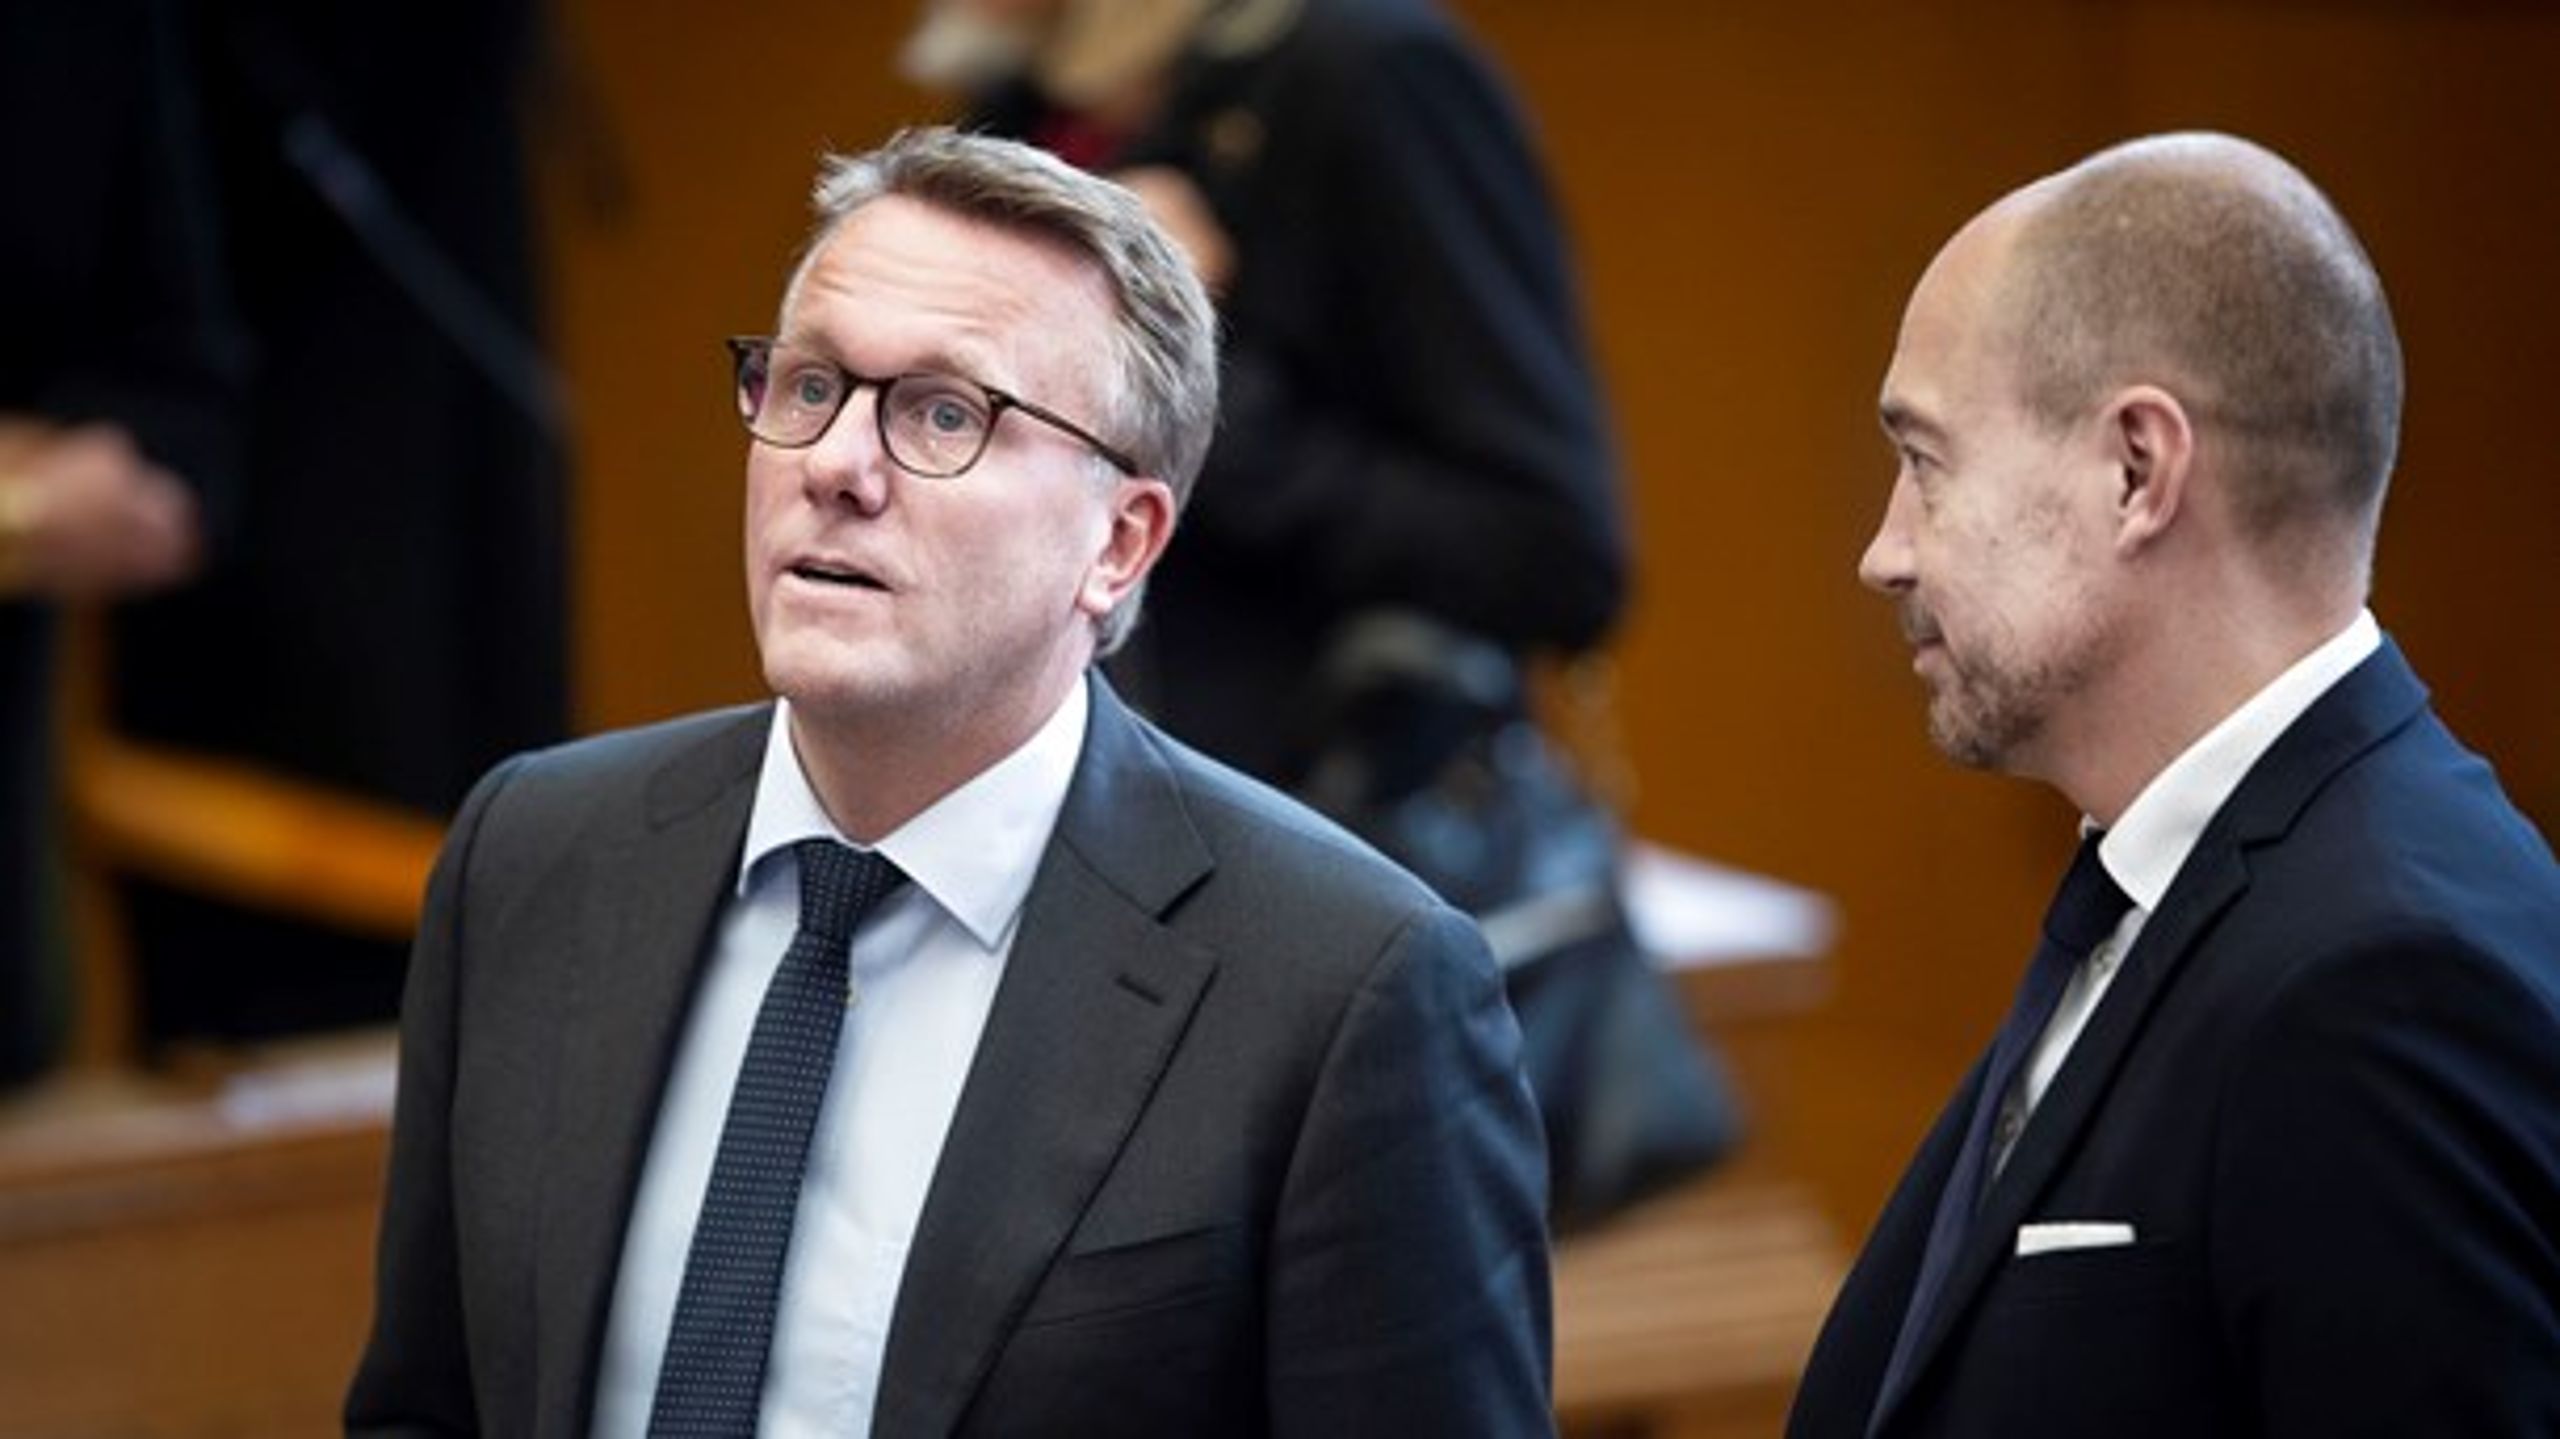 Skatteudvalget har kaldt Morten Bødskov (S) og Magnus Heunicke (S) i samråd om tobaksafgiften.